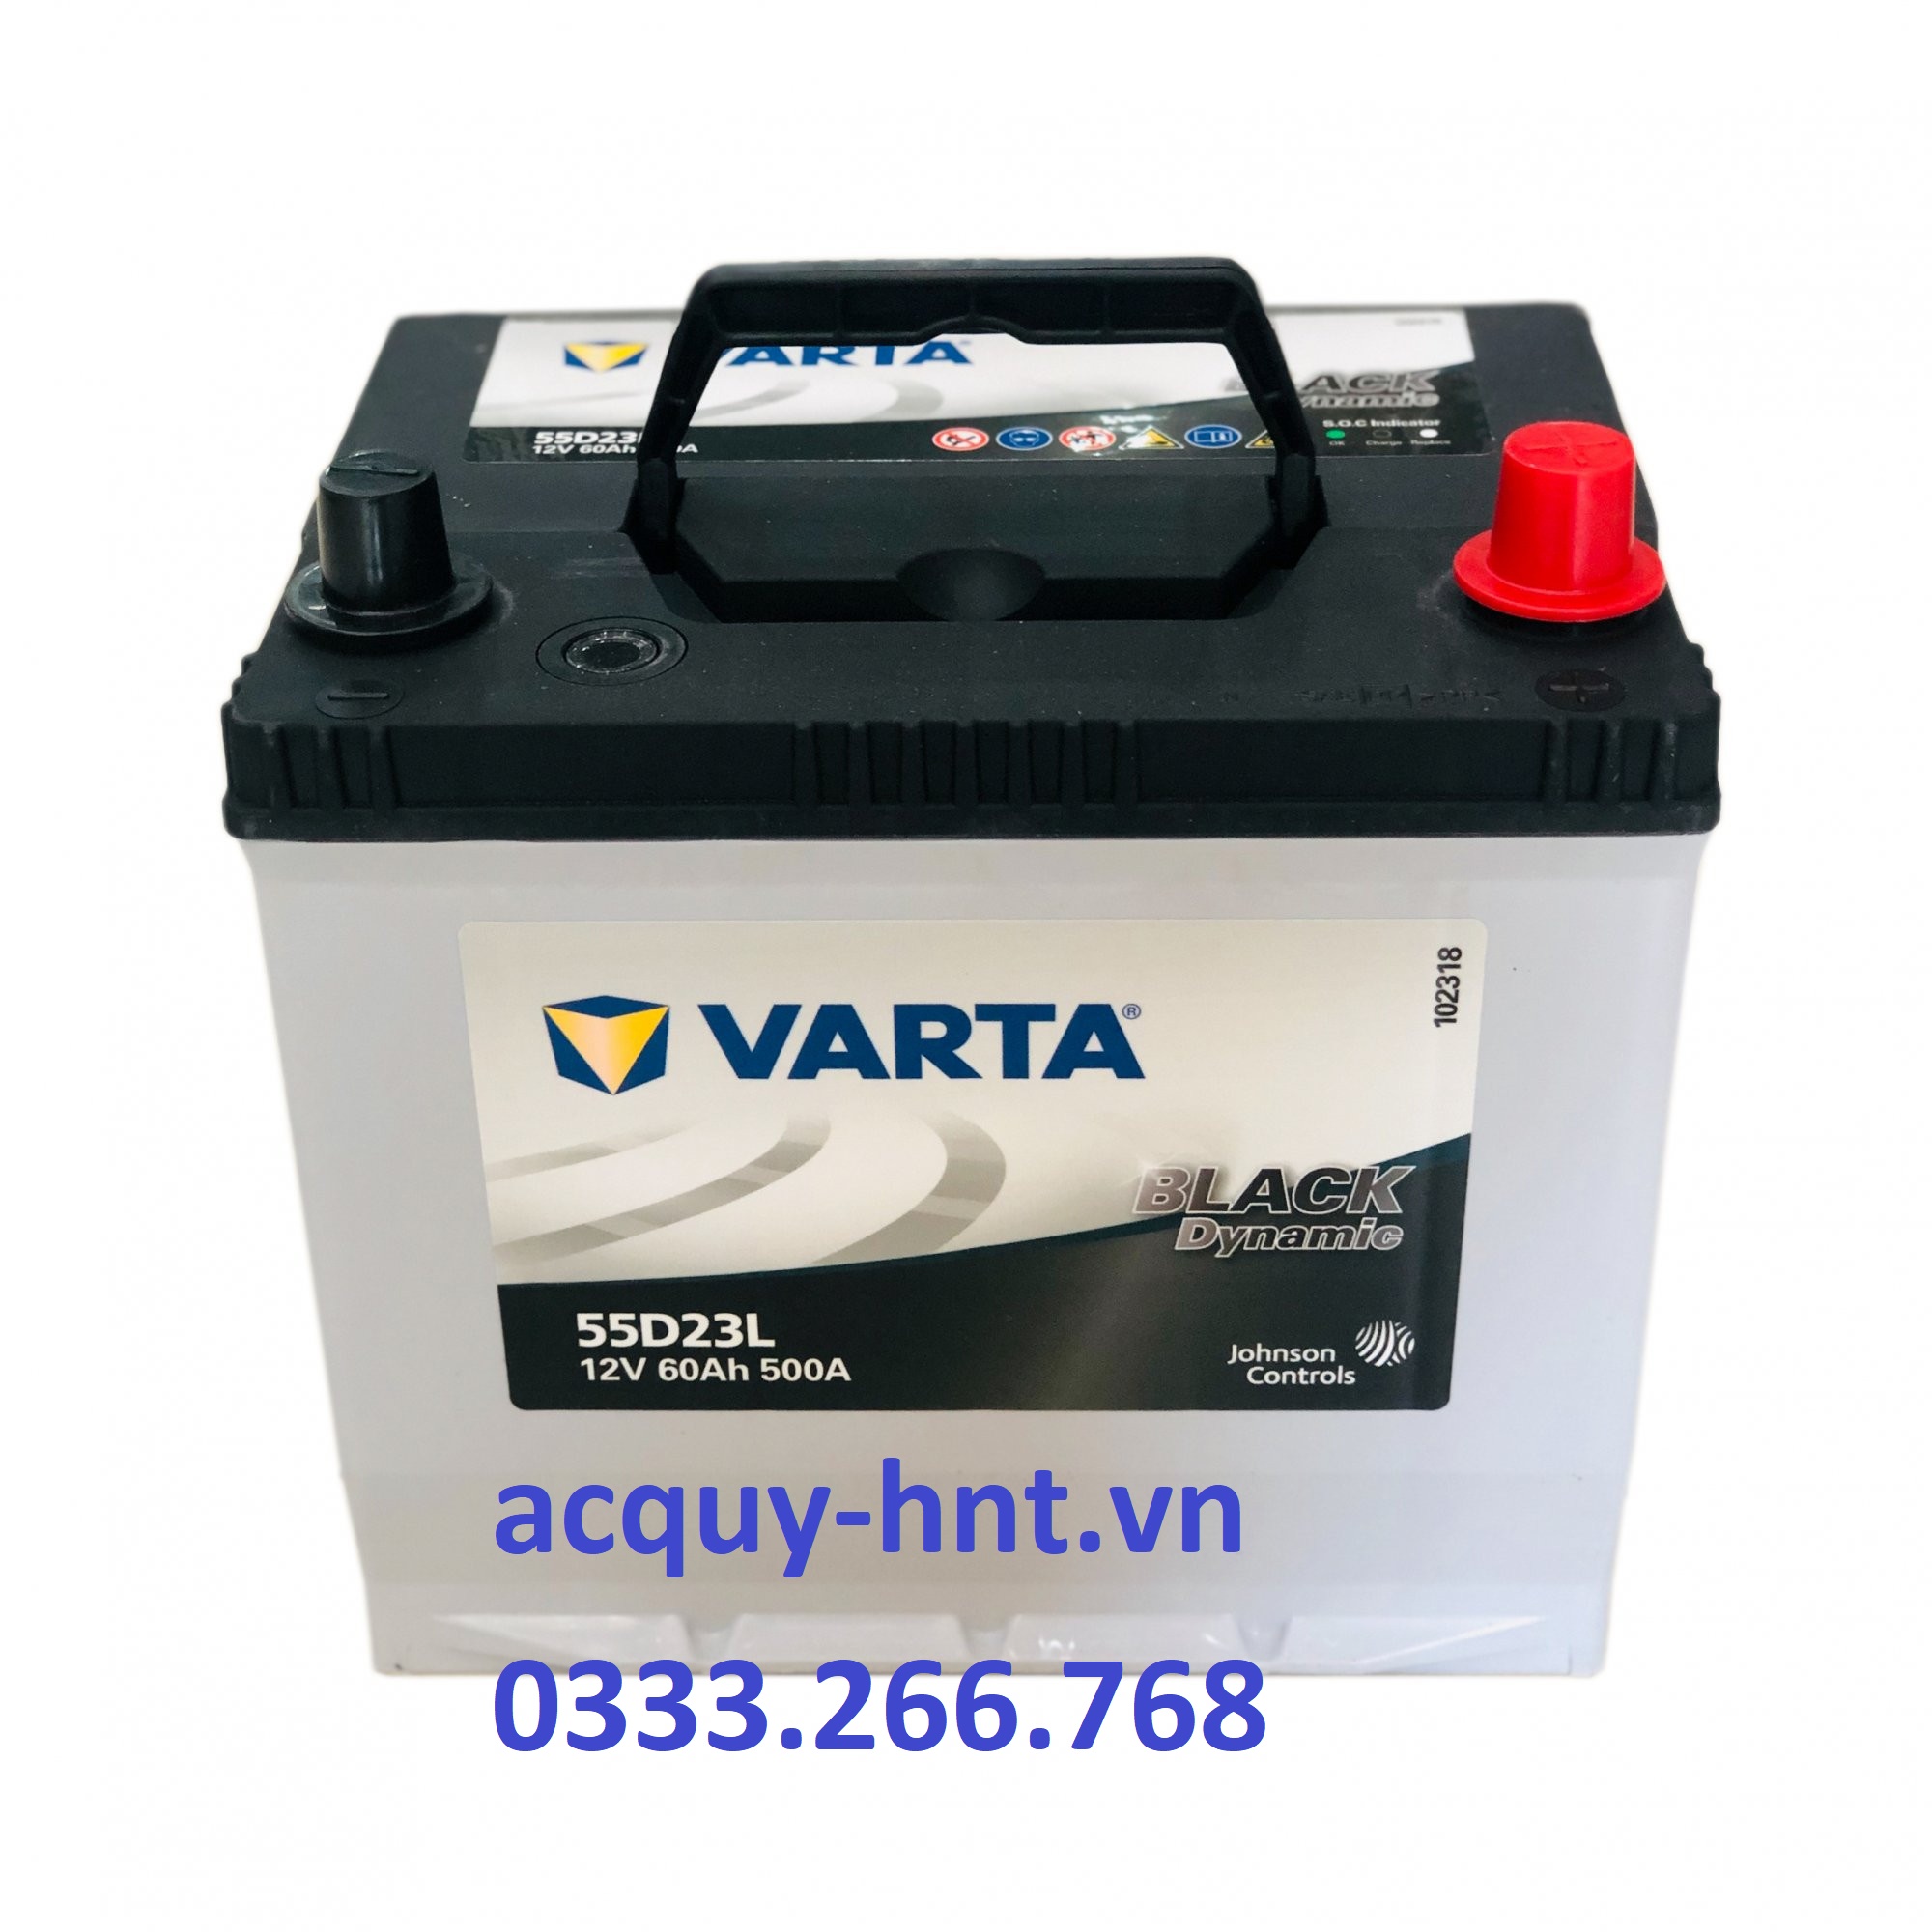 VARTA 80D23L ニッサン ティアナ 年式(2008.06-2014.02)搭載(55D23L) VARTA BLACK dynamic VR80D23L